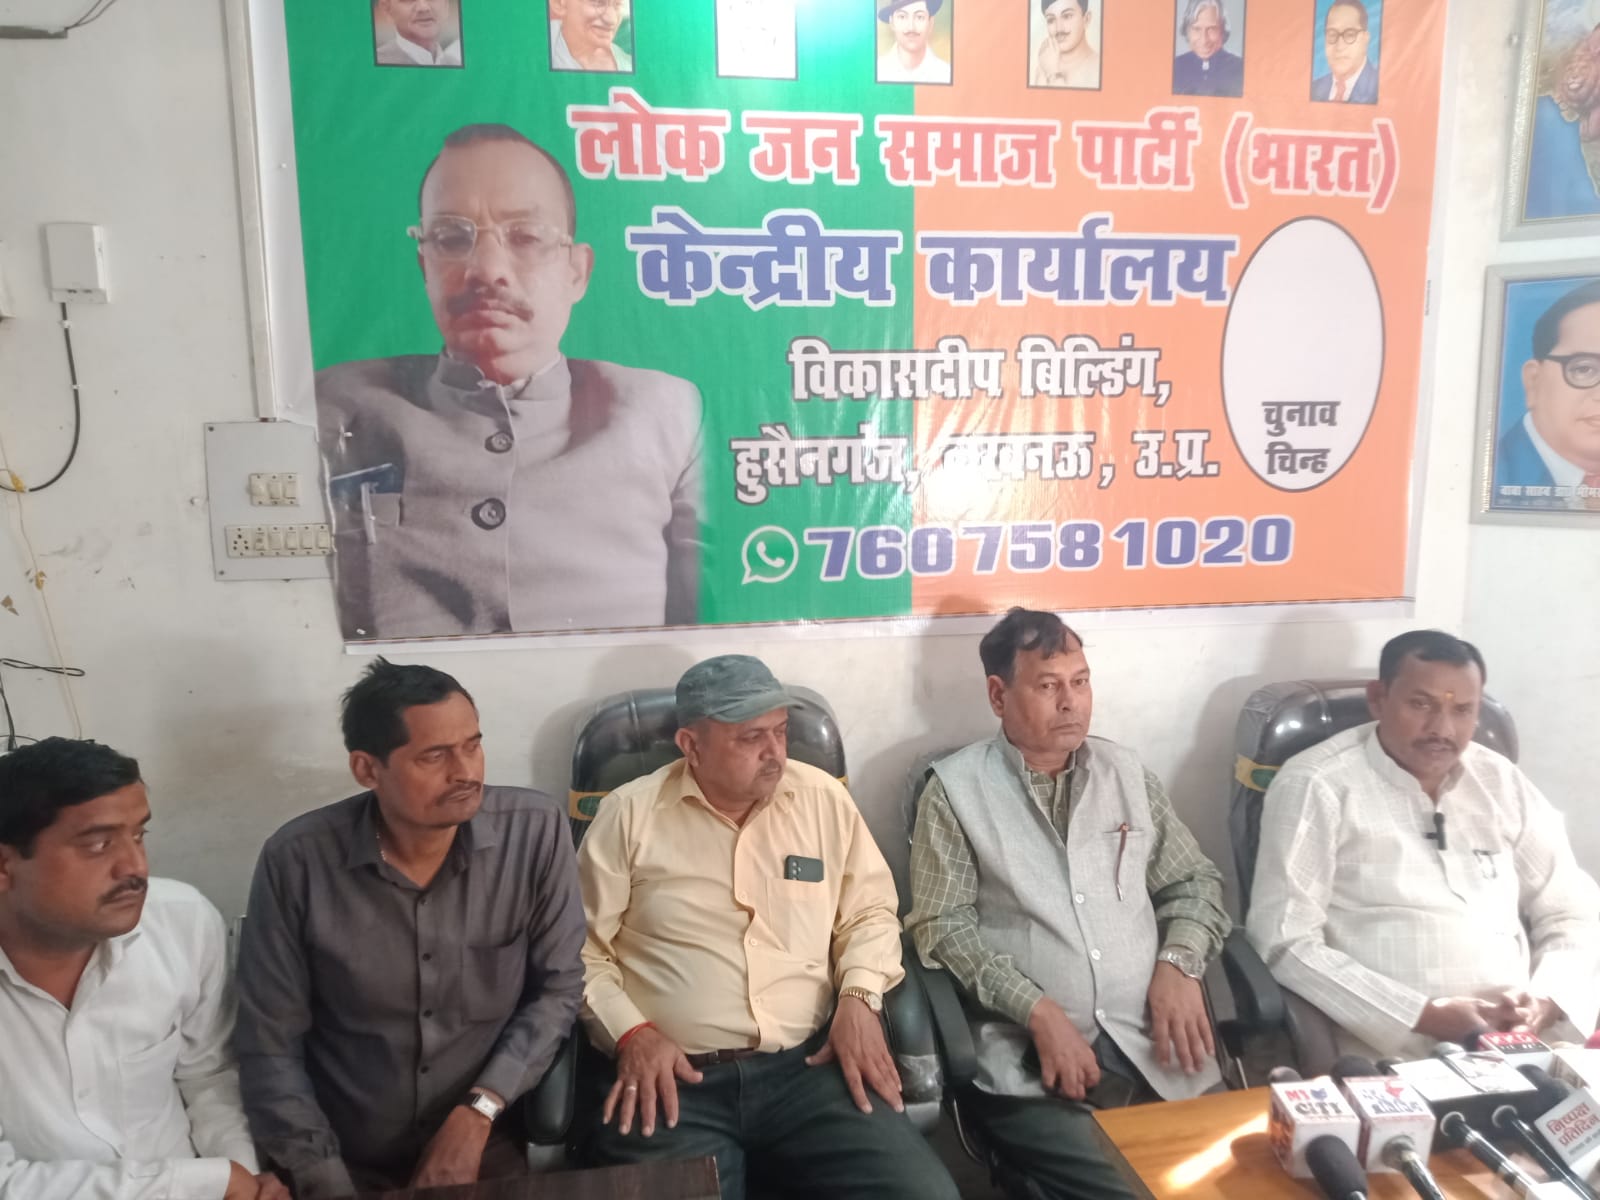 Lok Jan Samaj Party Bharat held a meeting regarding Lok Sabha elections at its office.